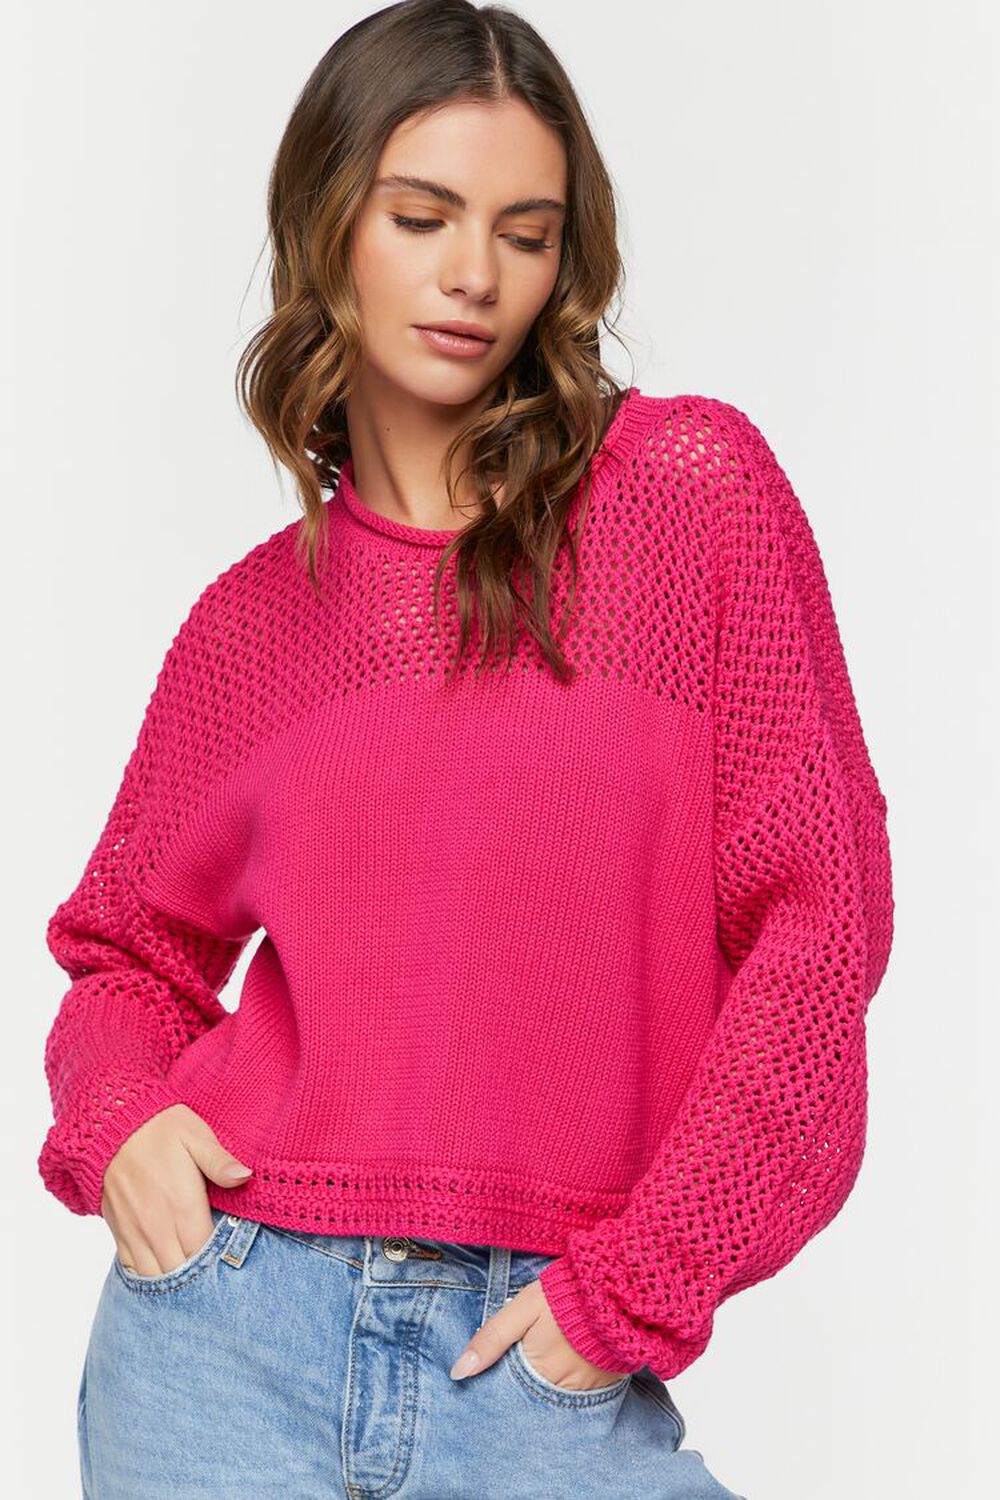 SHOCKING PINK Crochet Drop-Sleeve Sweater, image 1